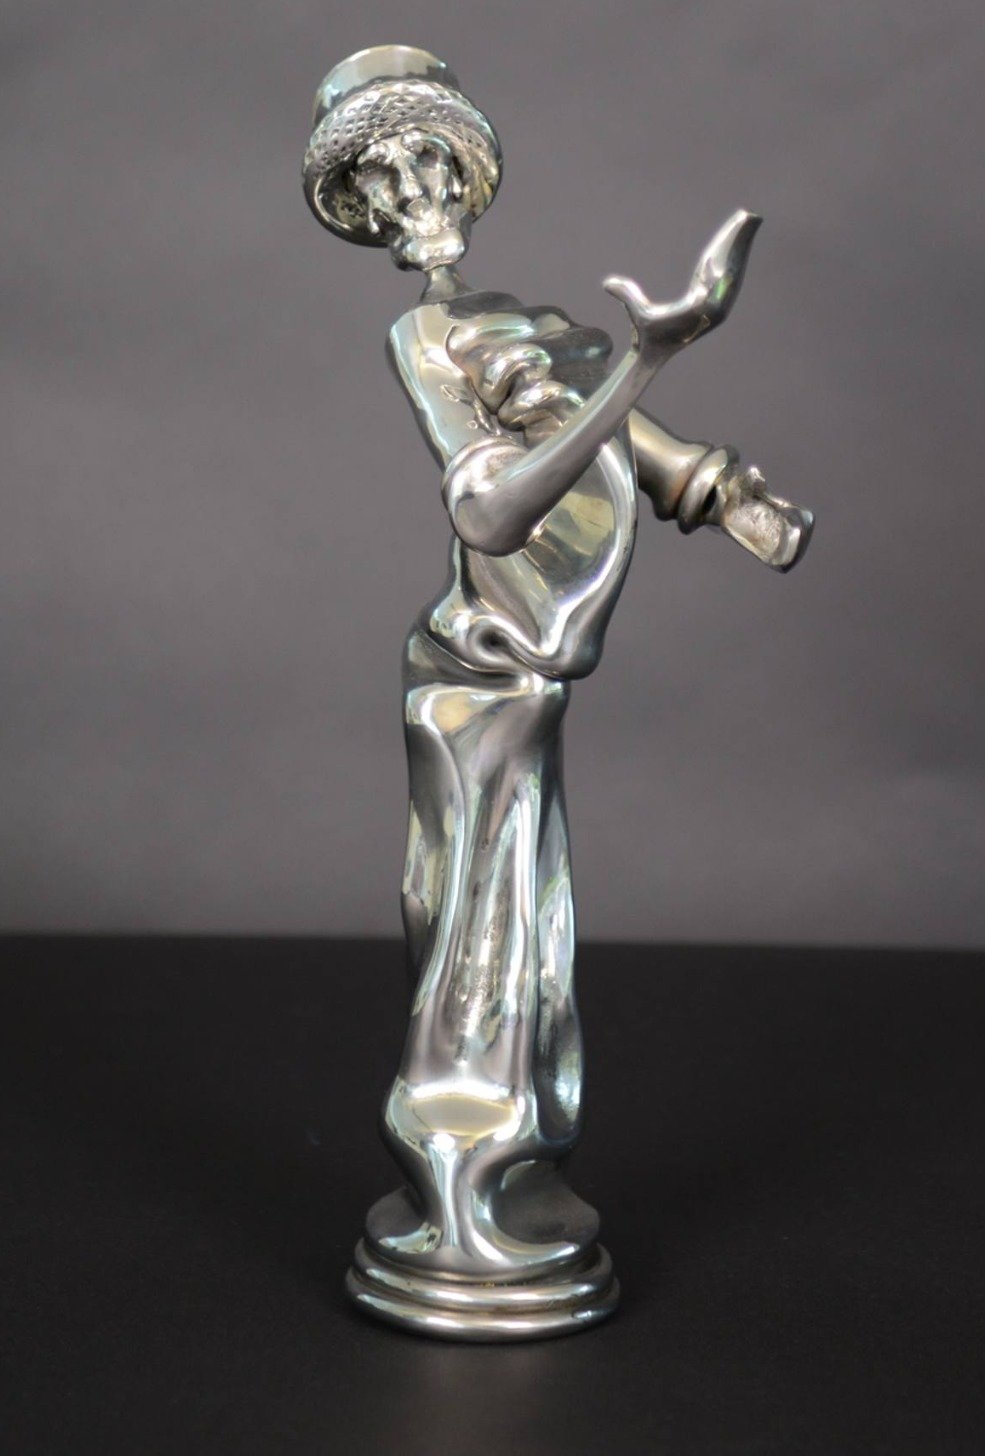 Artist: Claudio Bottero - Title: strigheta - Medium: Steel Sculpture - Year: 2019